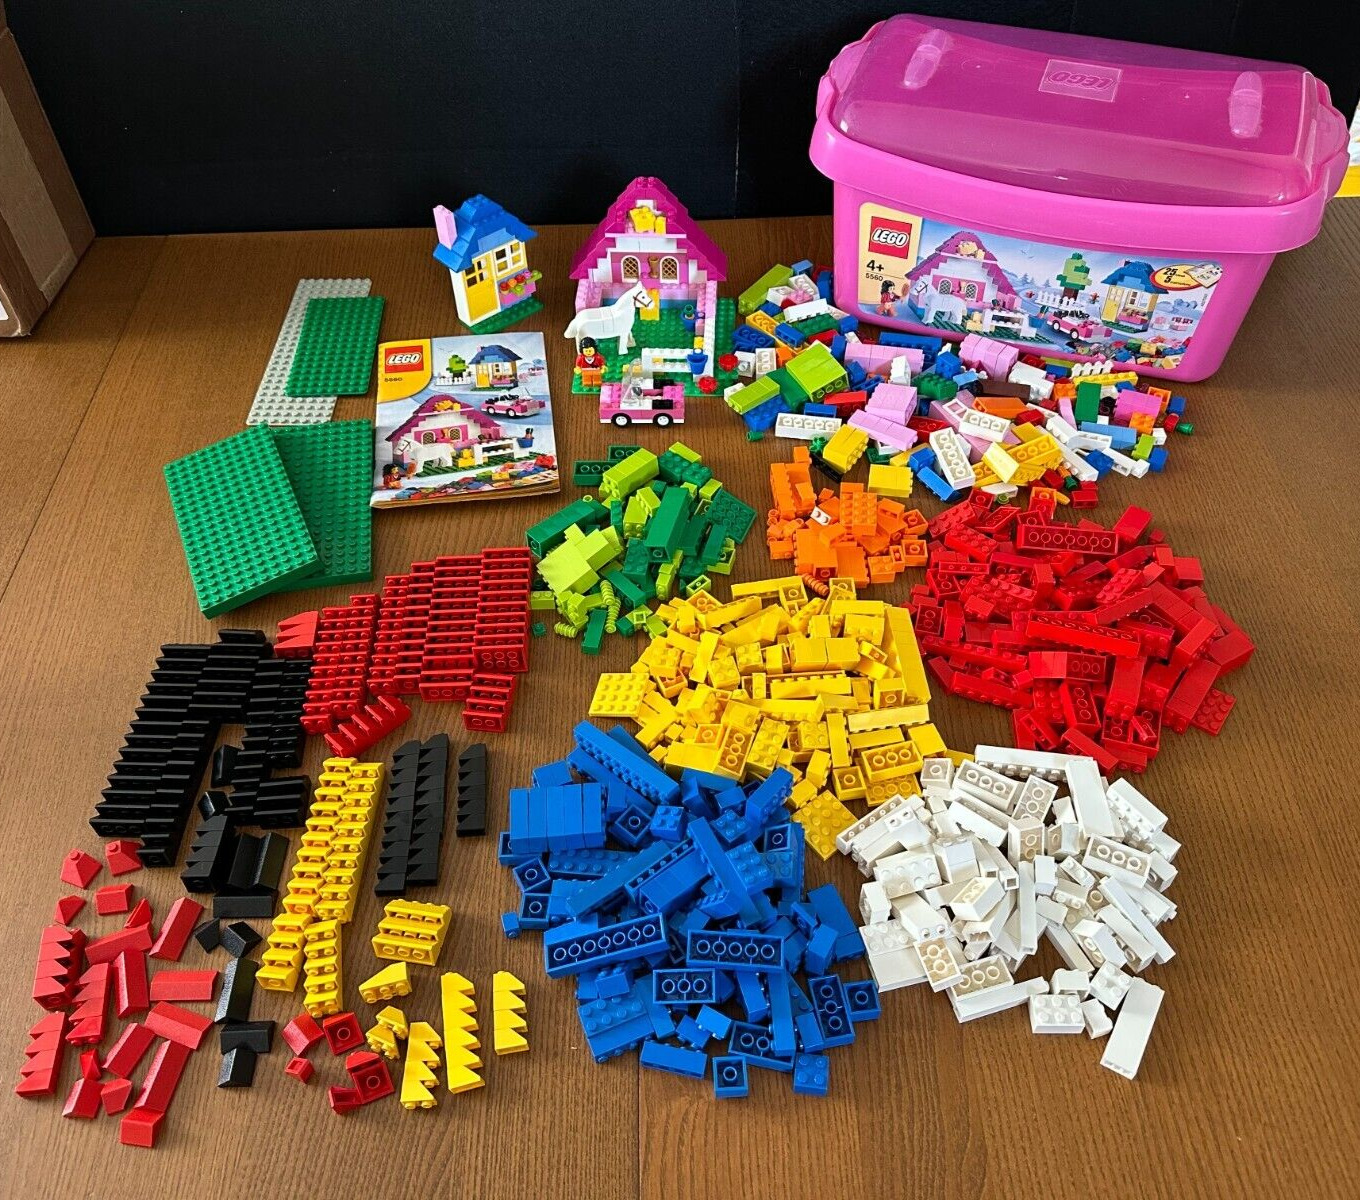 LOT LEGO CLASSIC 5560 LARGE PINK BRICK BOX PLUS 3 LBS BRICKS / ROOF PCS / PLATES